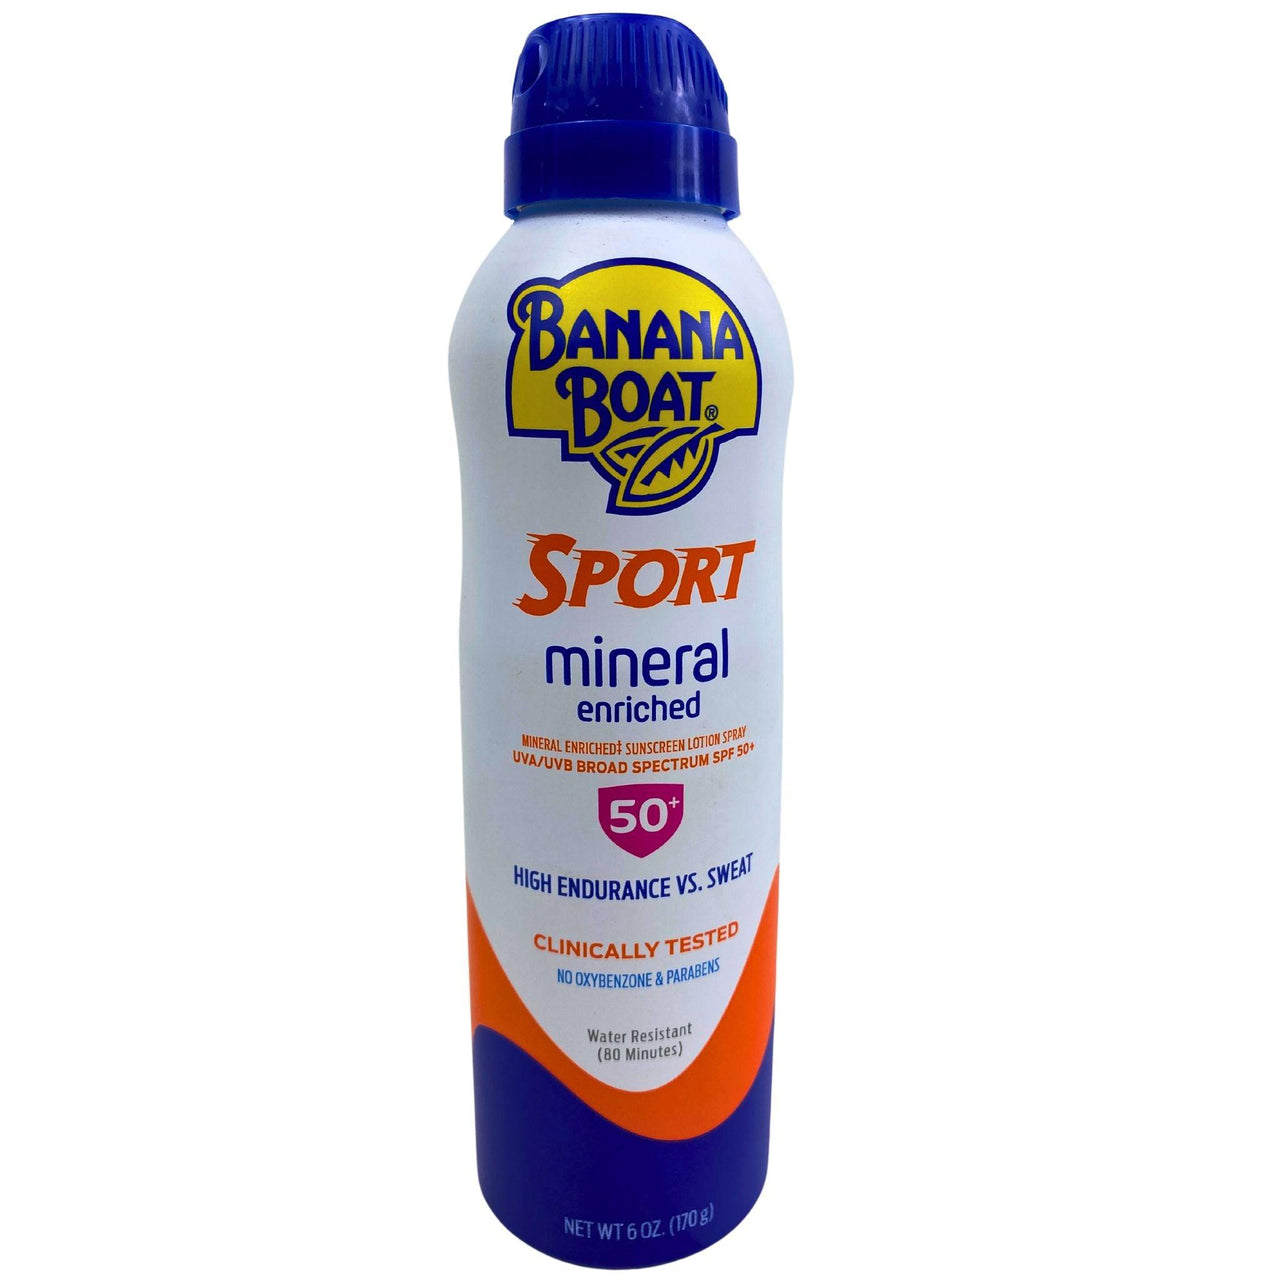 Banana Boat SPORT Mineral Enriched 50+ High Endurance vs. Sweat Water Resistant 80 minutes (50 Pcs Lot) - Discount Wholesalers Inc